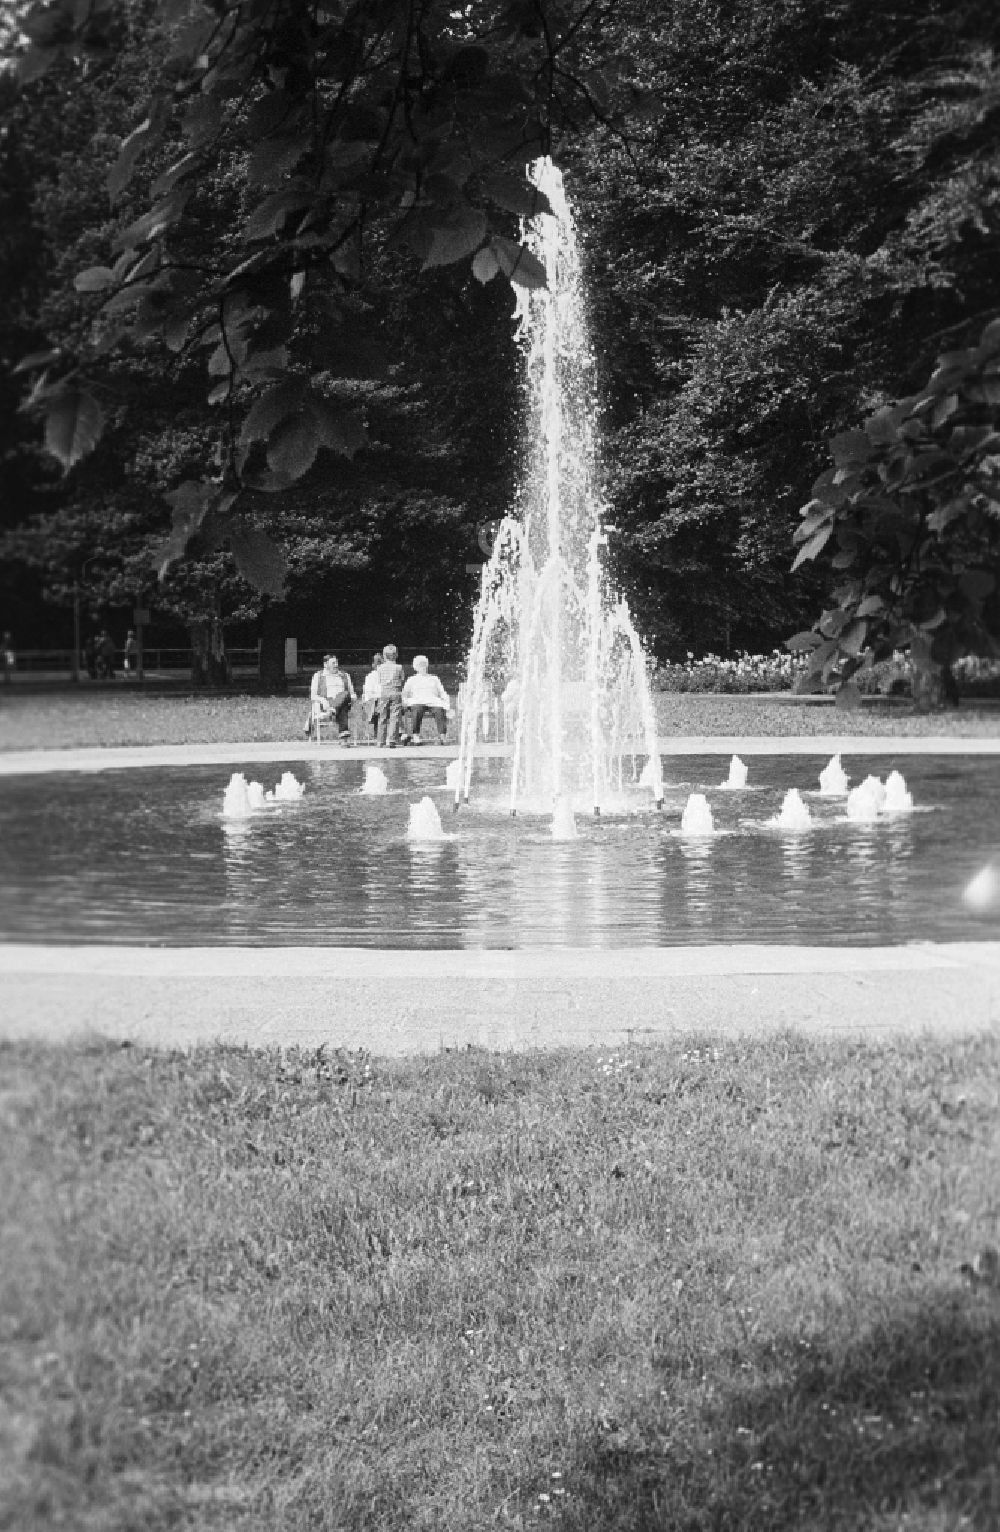 DDR-Bildarchiv: Berlin - Springbrunnen im Rosengarten am Treptower Park in Berlin, der ehemaligen Hauptstadt der DDR, Deutsche Demokratische Republik